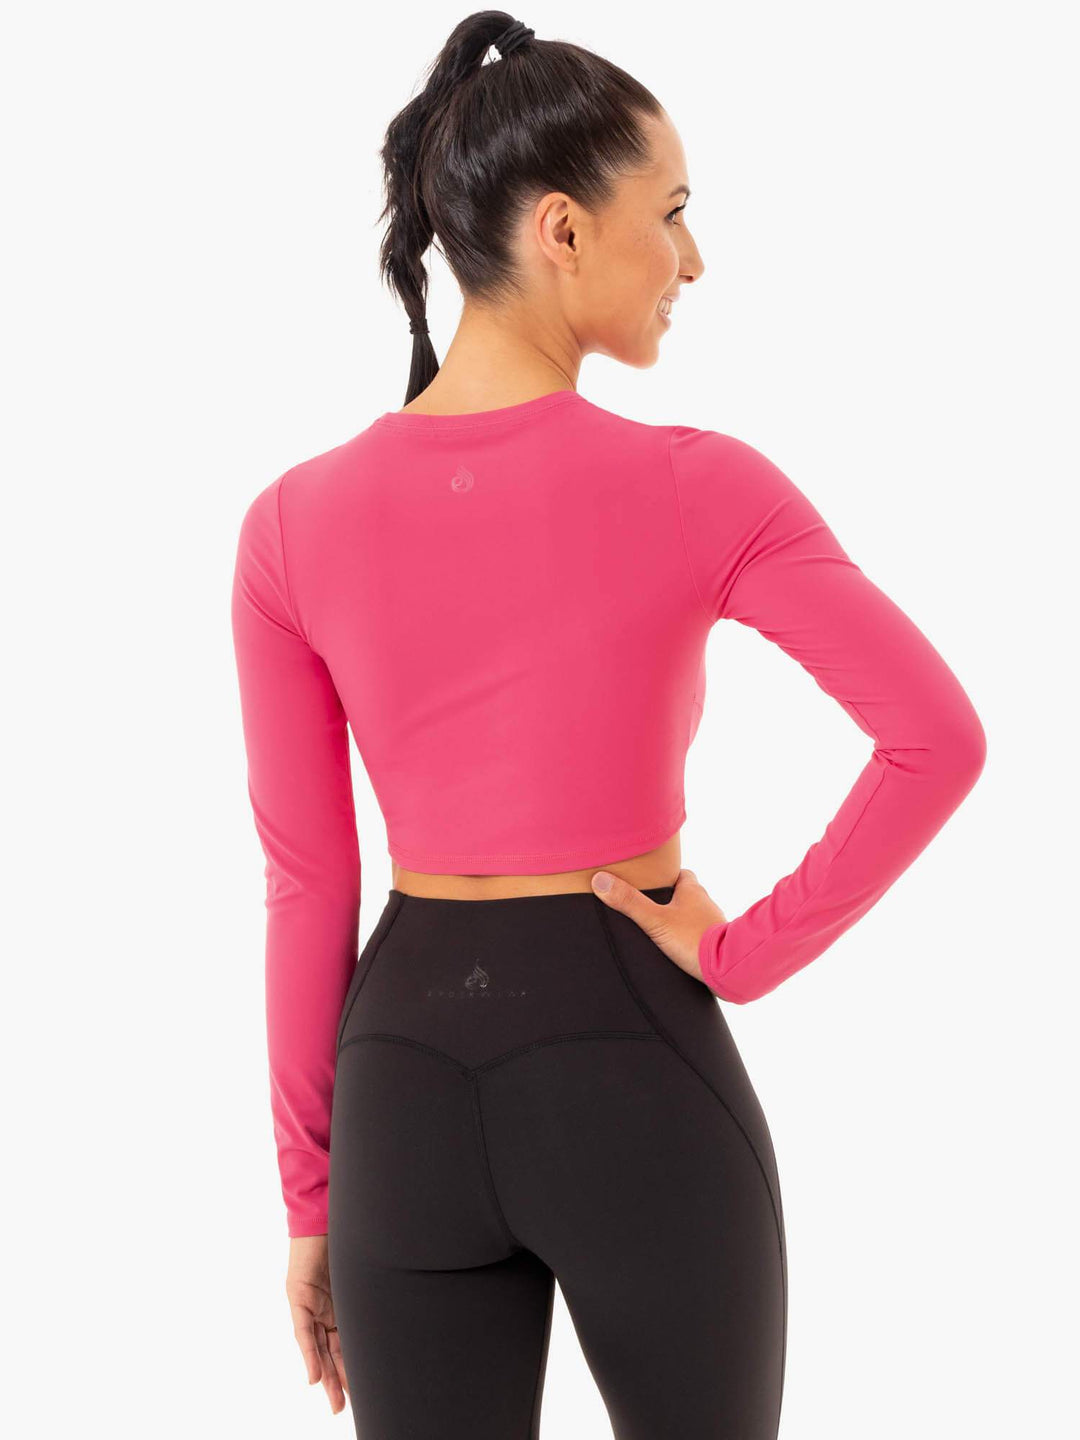 Sola Long Sleeve Top - Pink Clothing Ryderwear 